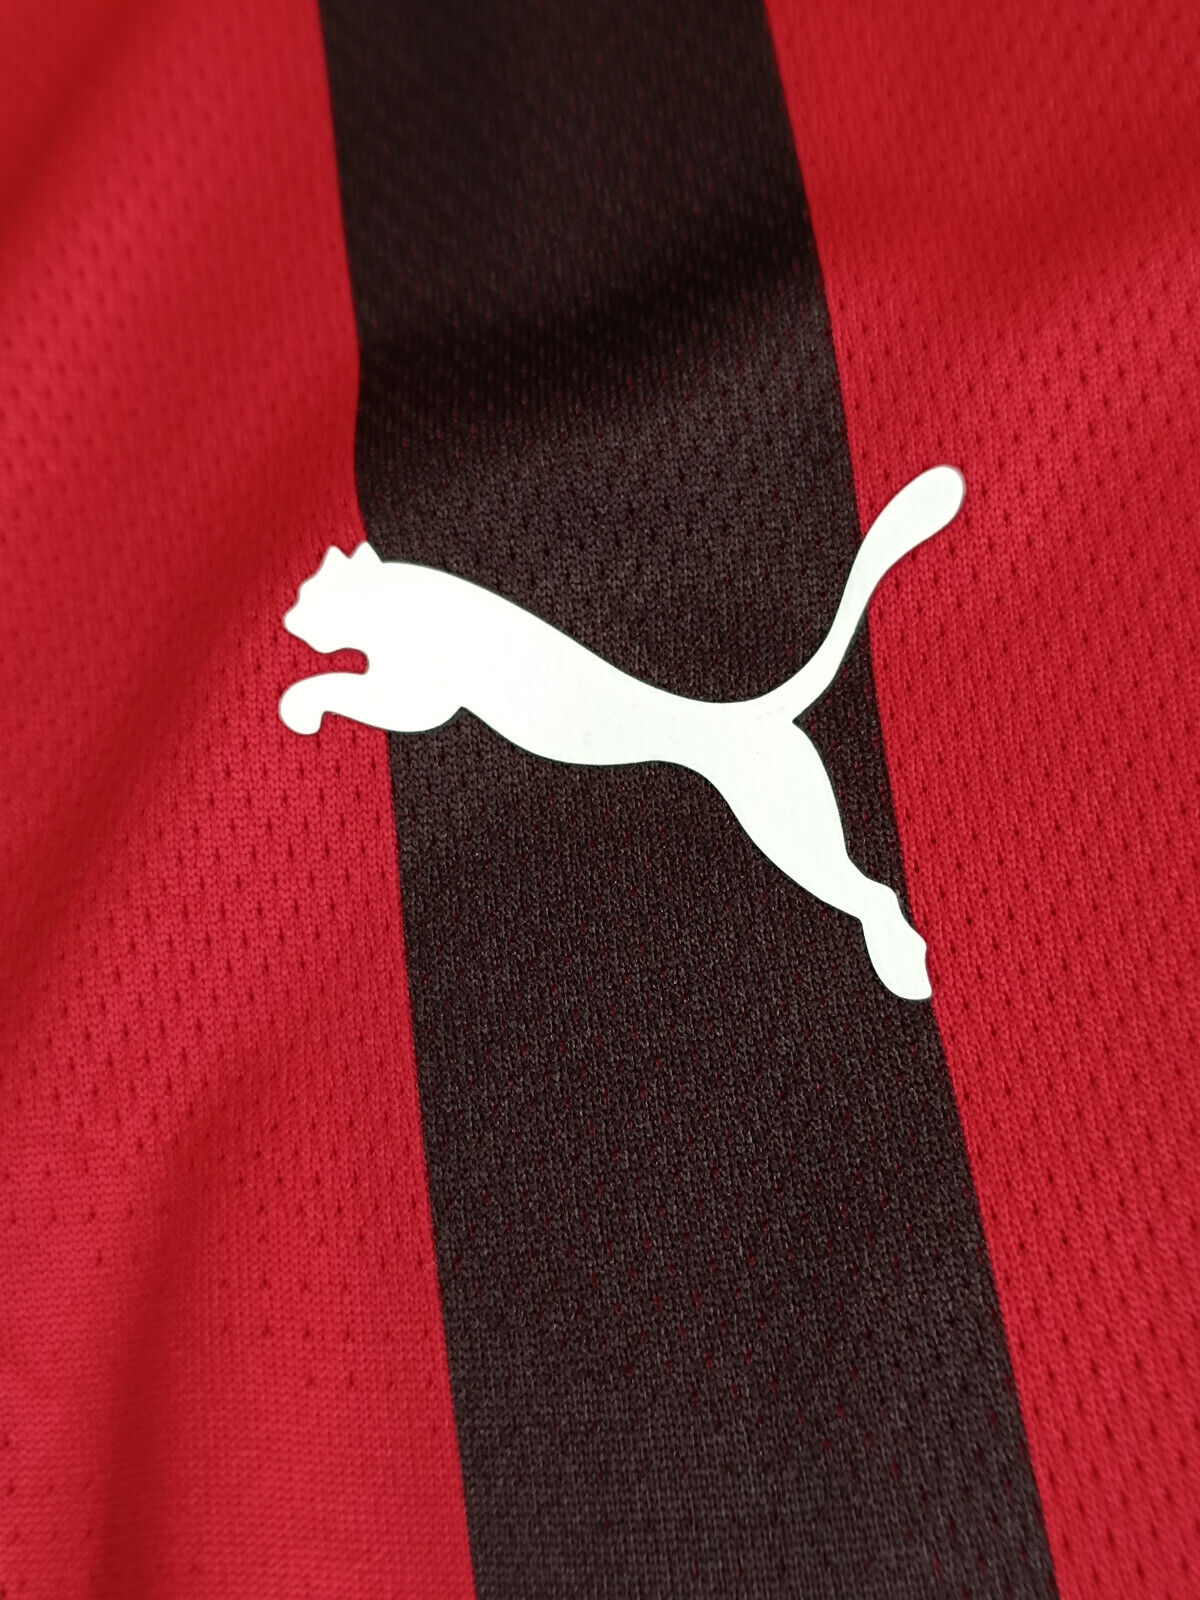 maglia calcio match issue worn AC MILAN Ibrahimovic 2021-22 Puma Authentic GARA